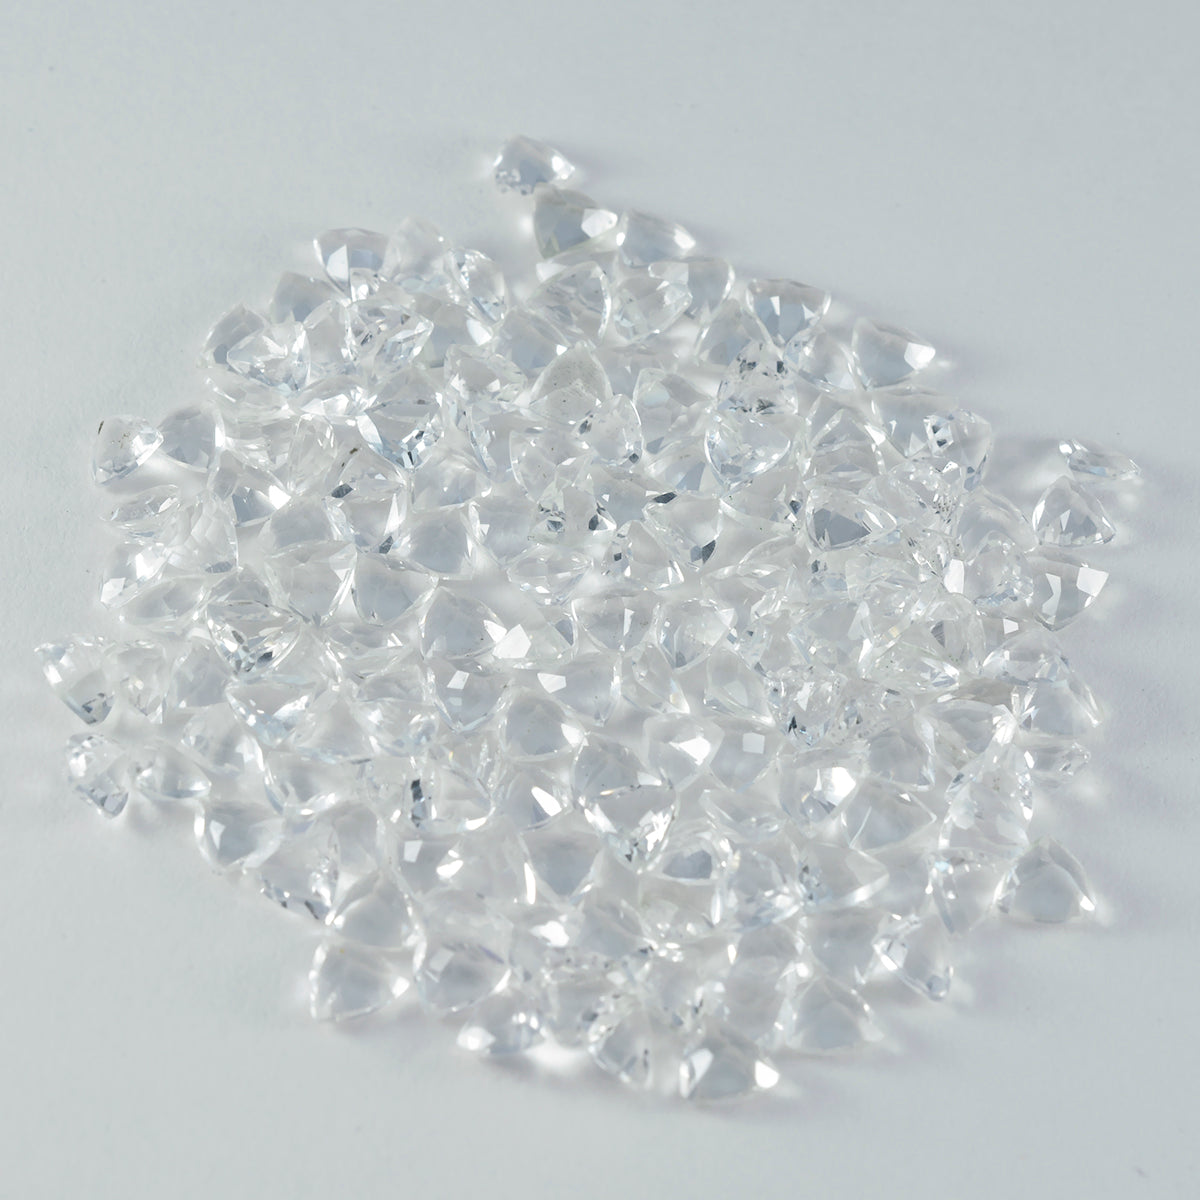 Riyogems 1PC White Crystal Quartz Faceted 5x5 mm Trillion Shape wonderful Quality Gems